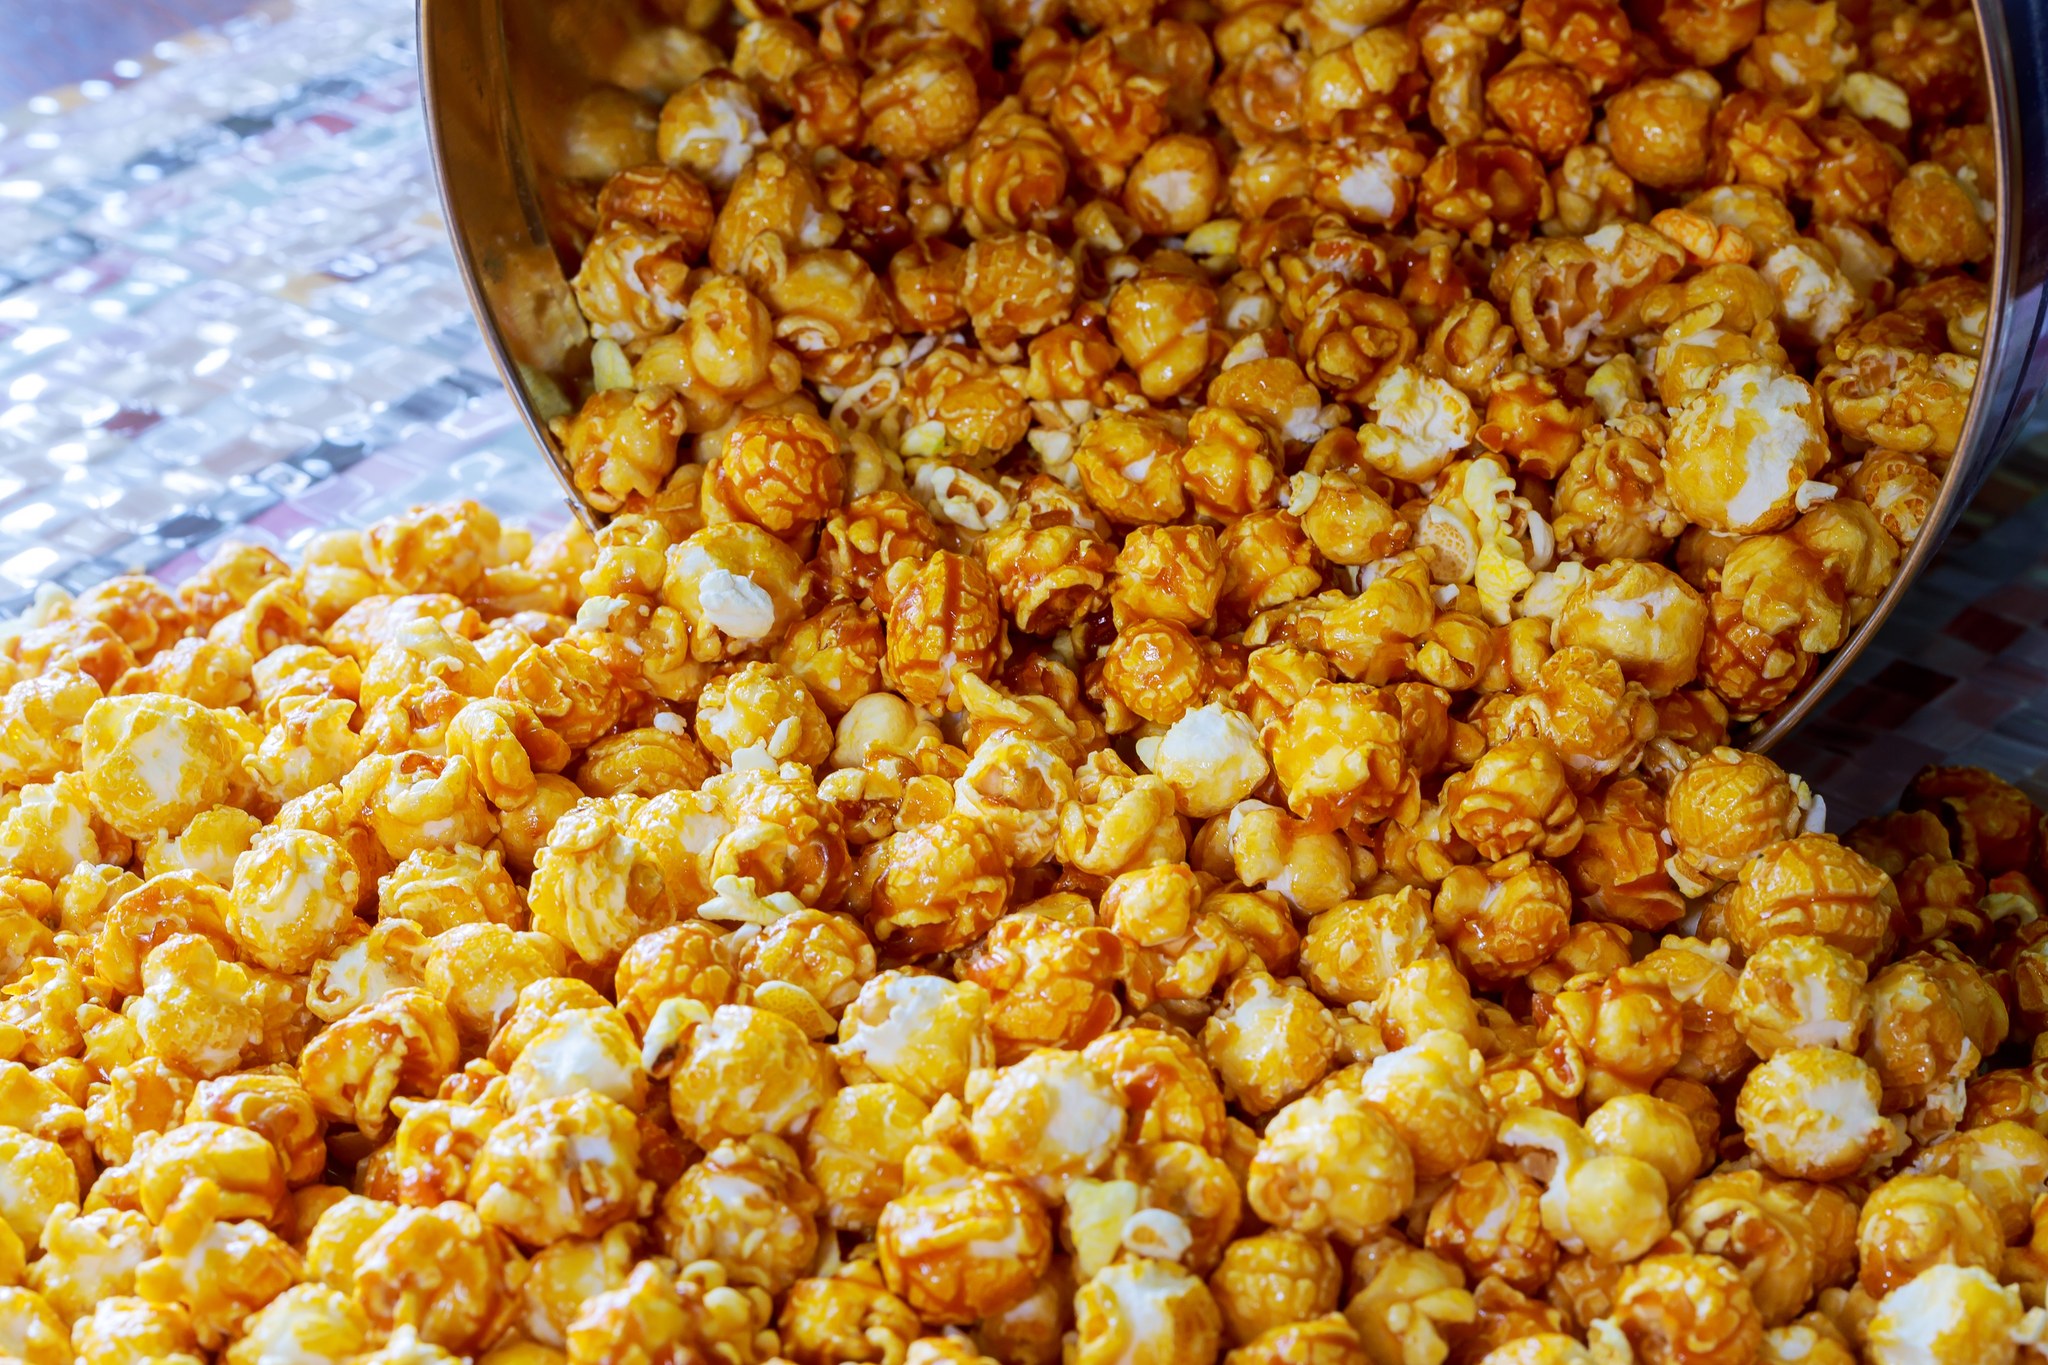 Popcorn texture. Popcorn snacks as background. popcorn